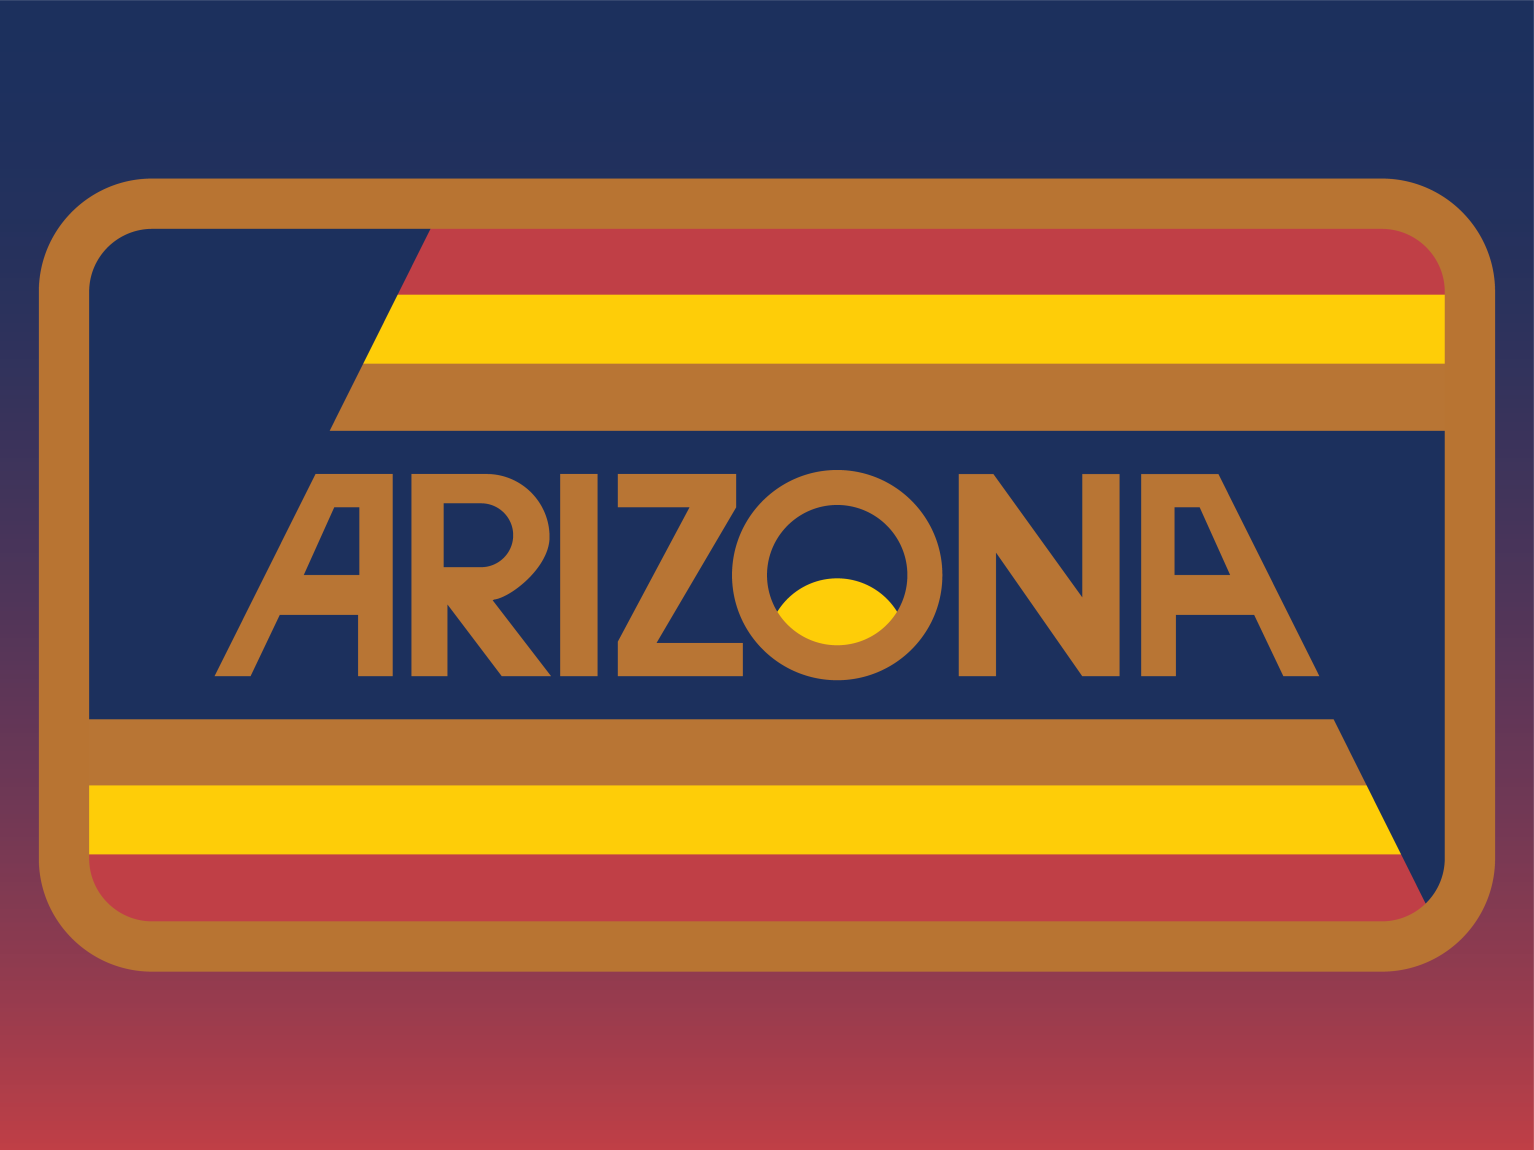 Arizona Stripes by Nicholas Carmichael on Dribbble